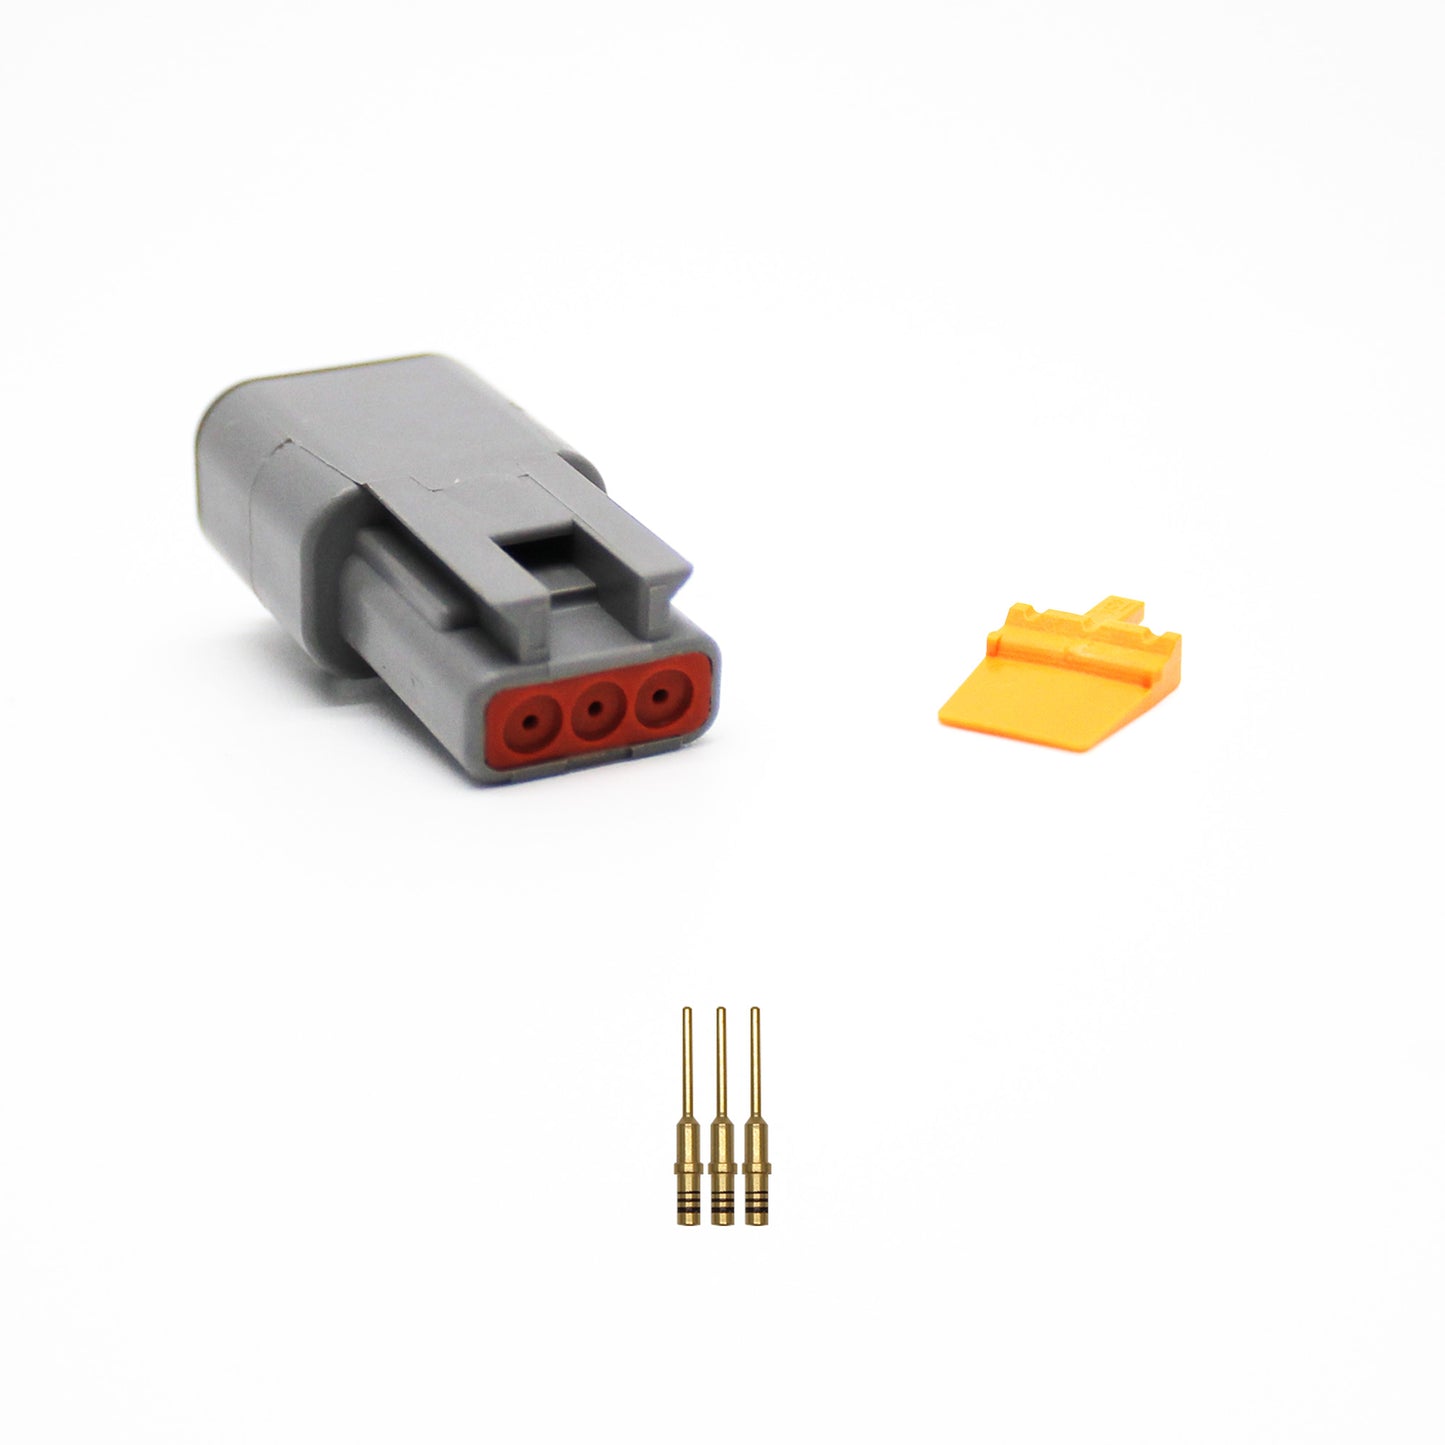 Deutsch Male & Female DTM Plug & Pins including Wedge Lock - AimShop.com